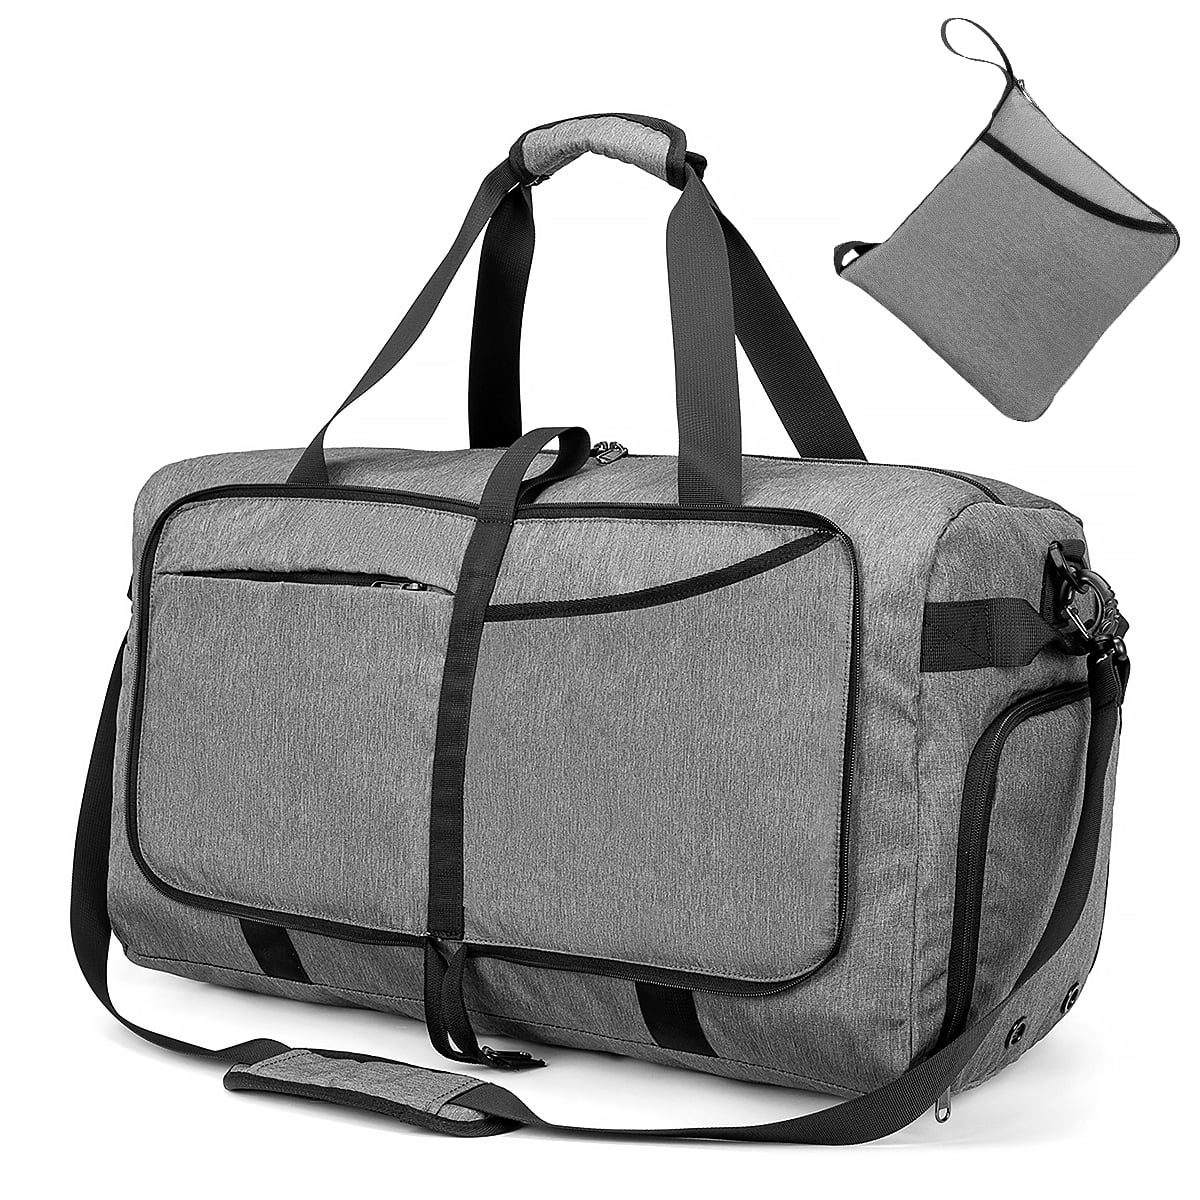 Travel Duffel Bags for Traveling Women & Men - Foldable Weekender ...